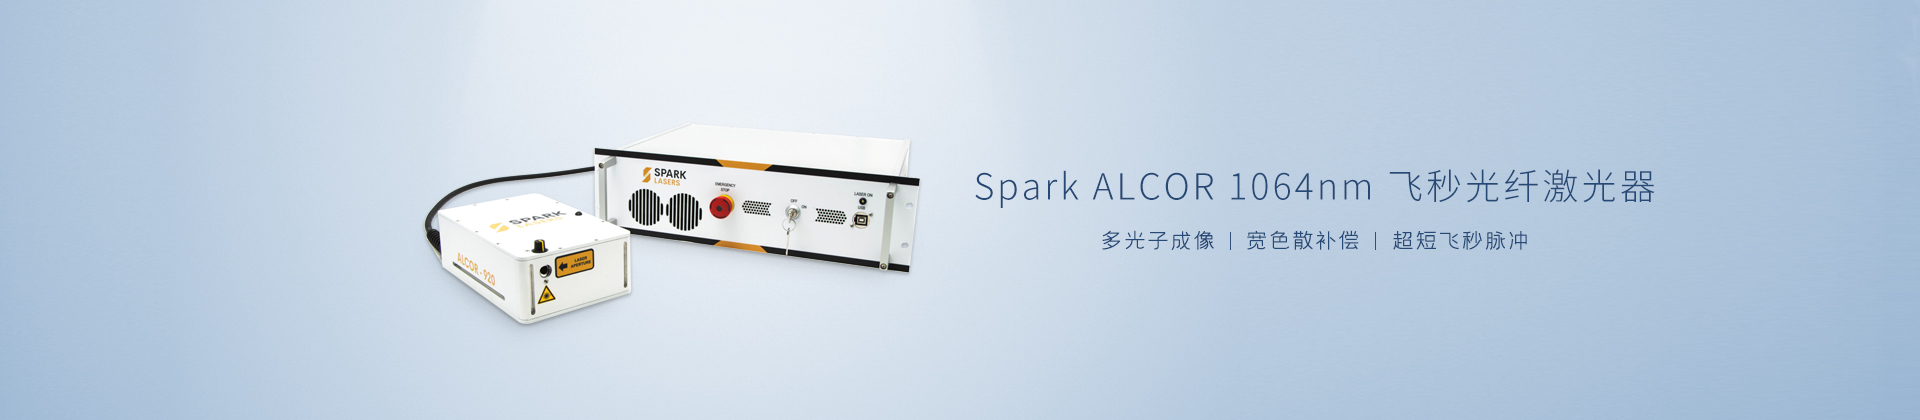 Spark ALCOR 1064nm飞秒光纤激光器